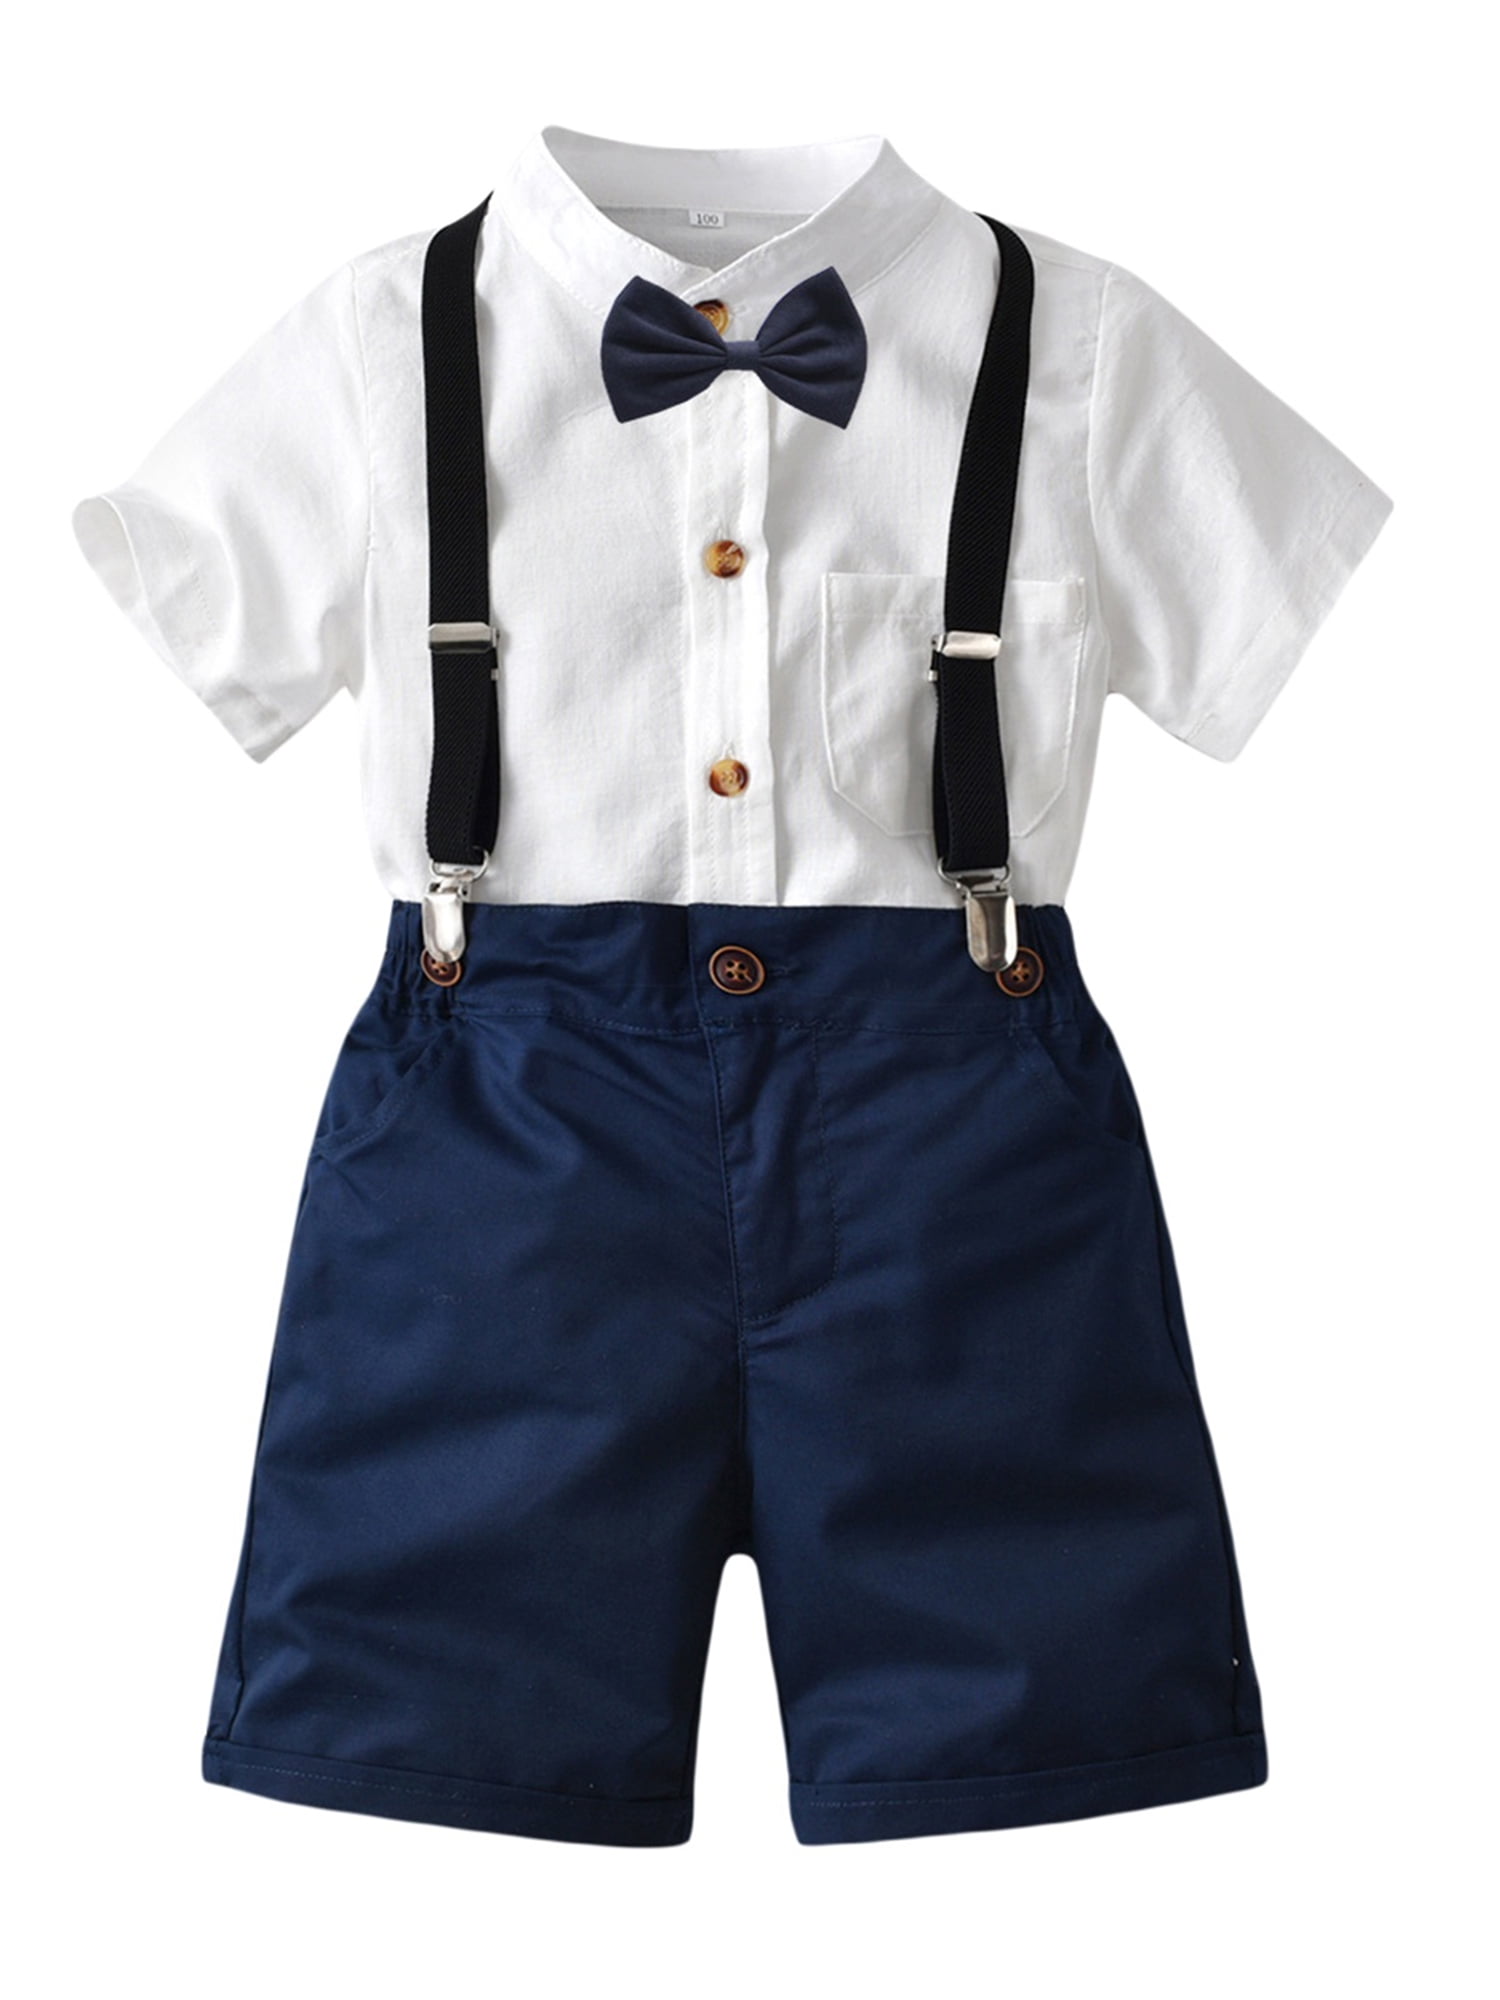 Kids Baby Boys Gentleman Bowtie Short Sleeve Shirt+Suspenders Shorts Set Outfits 